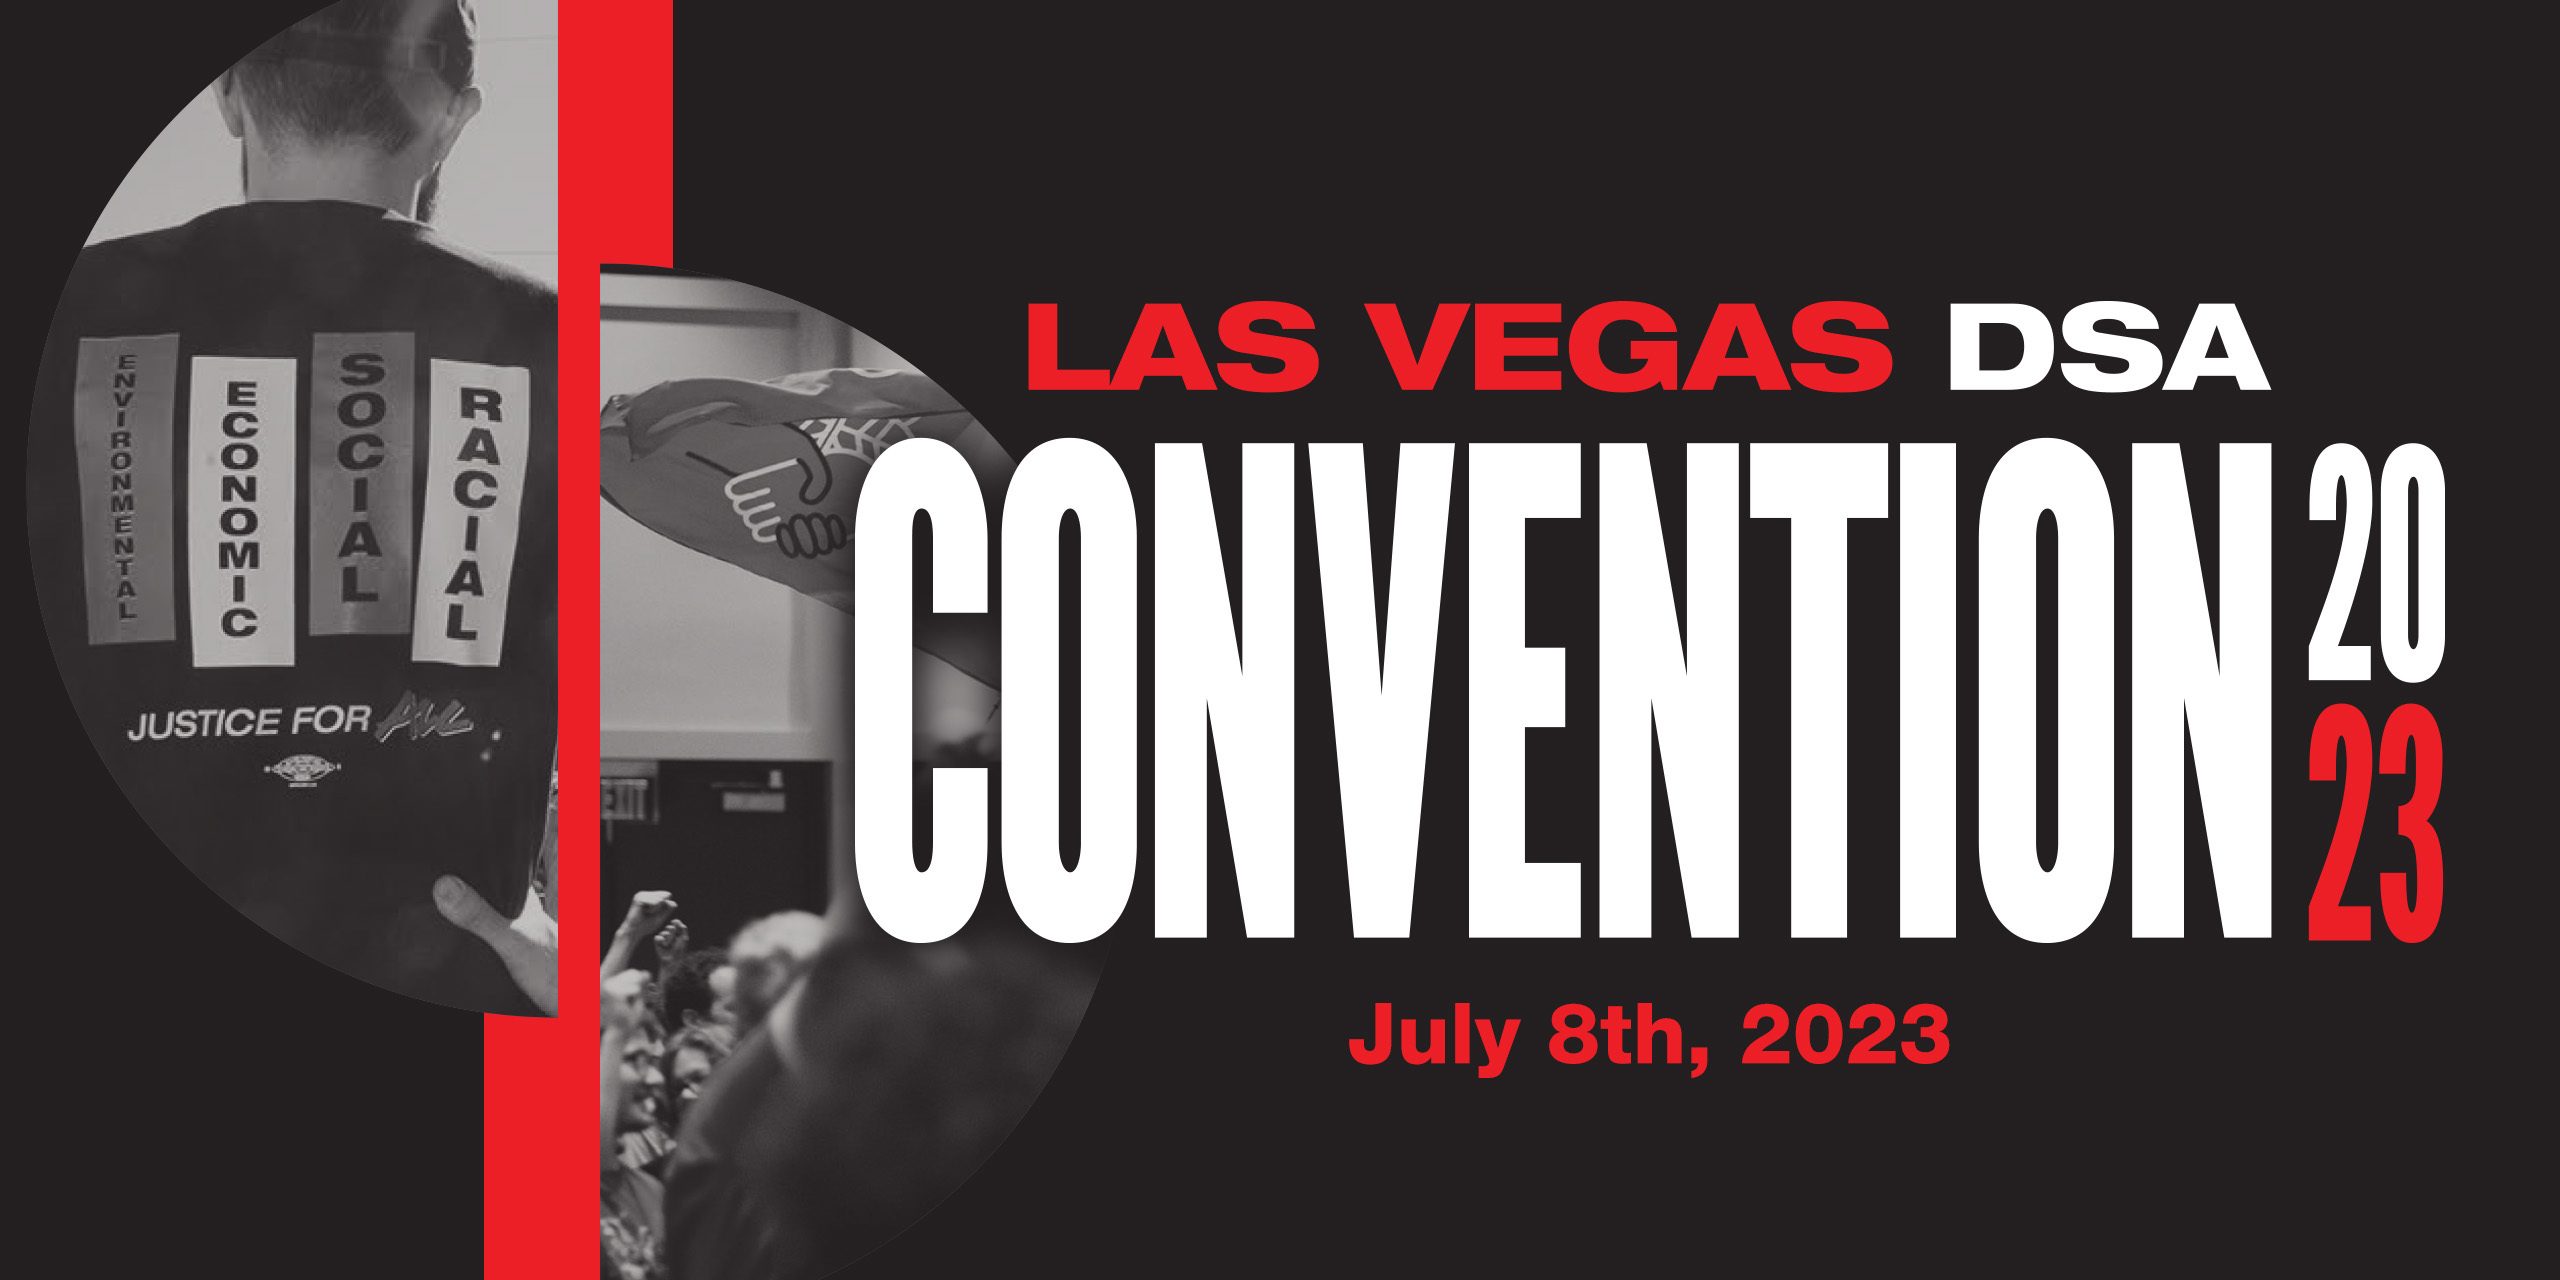 2023 LVDSA Annual Convention Las Vegas DSA